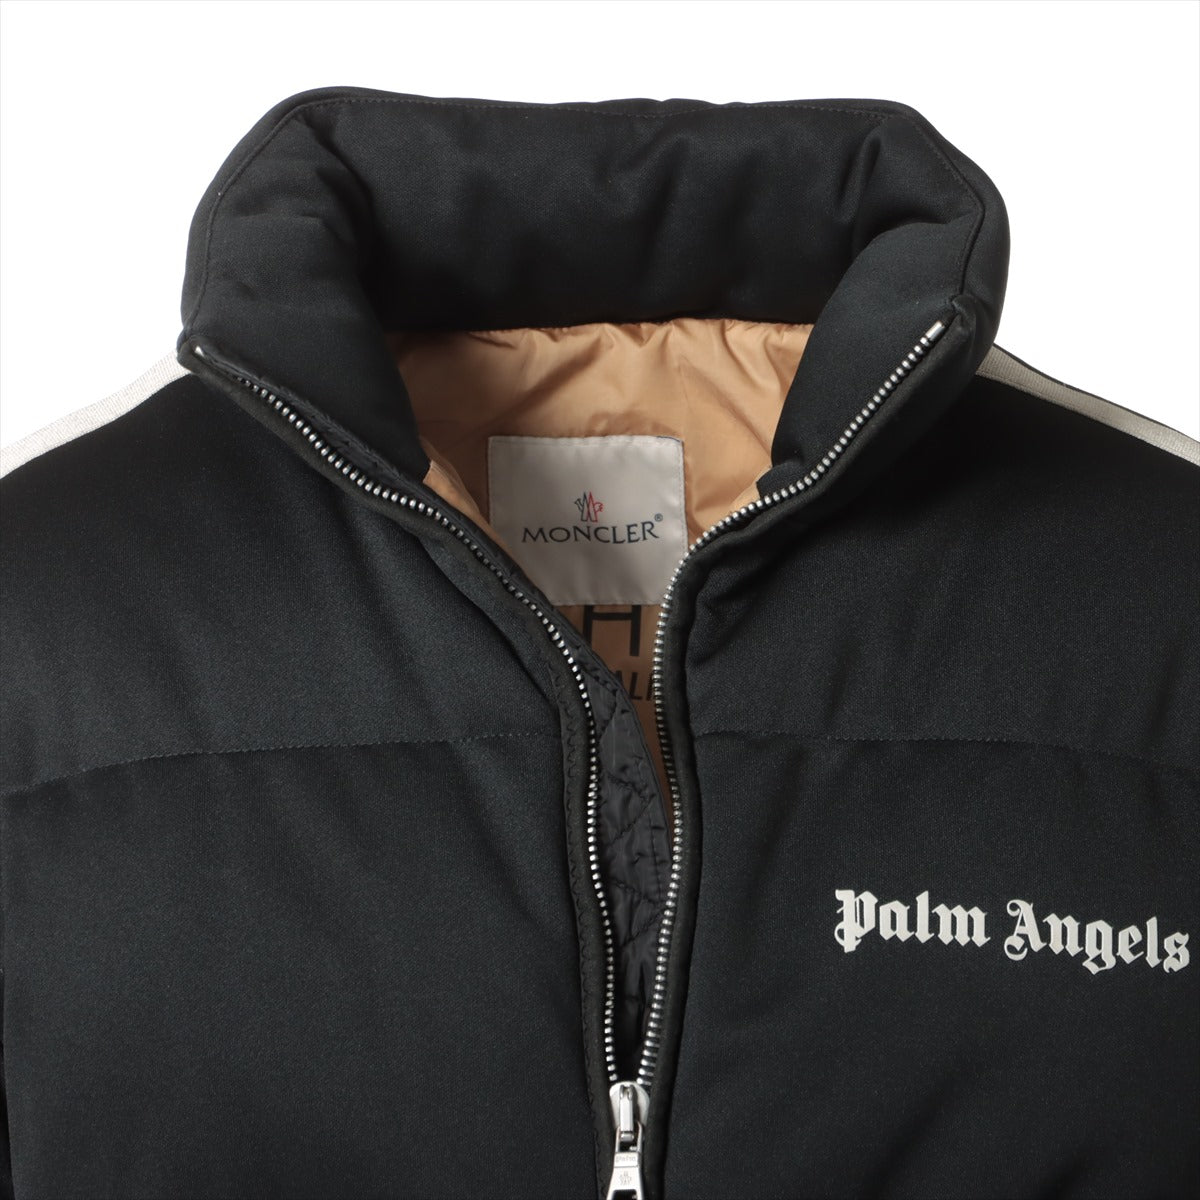 Moncler x Palm Angels RODMAN 21 years Polyester & nylon Down jacket 2 Men's black x beige